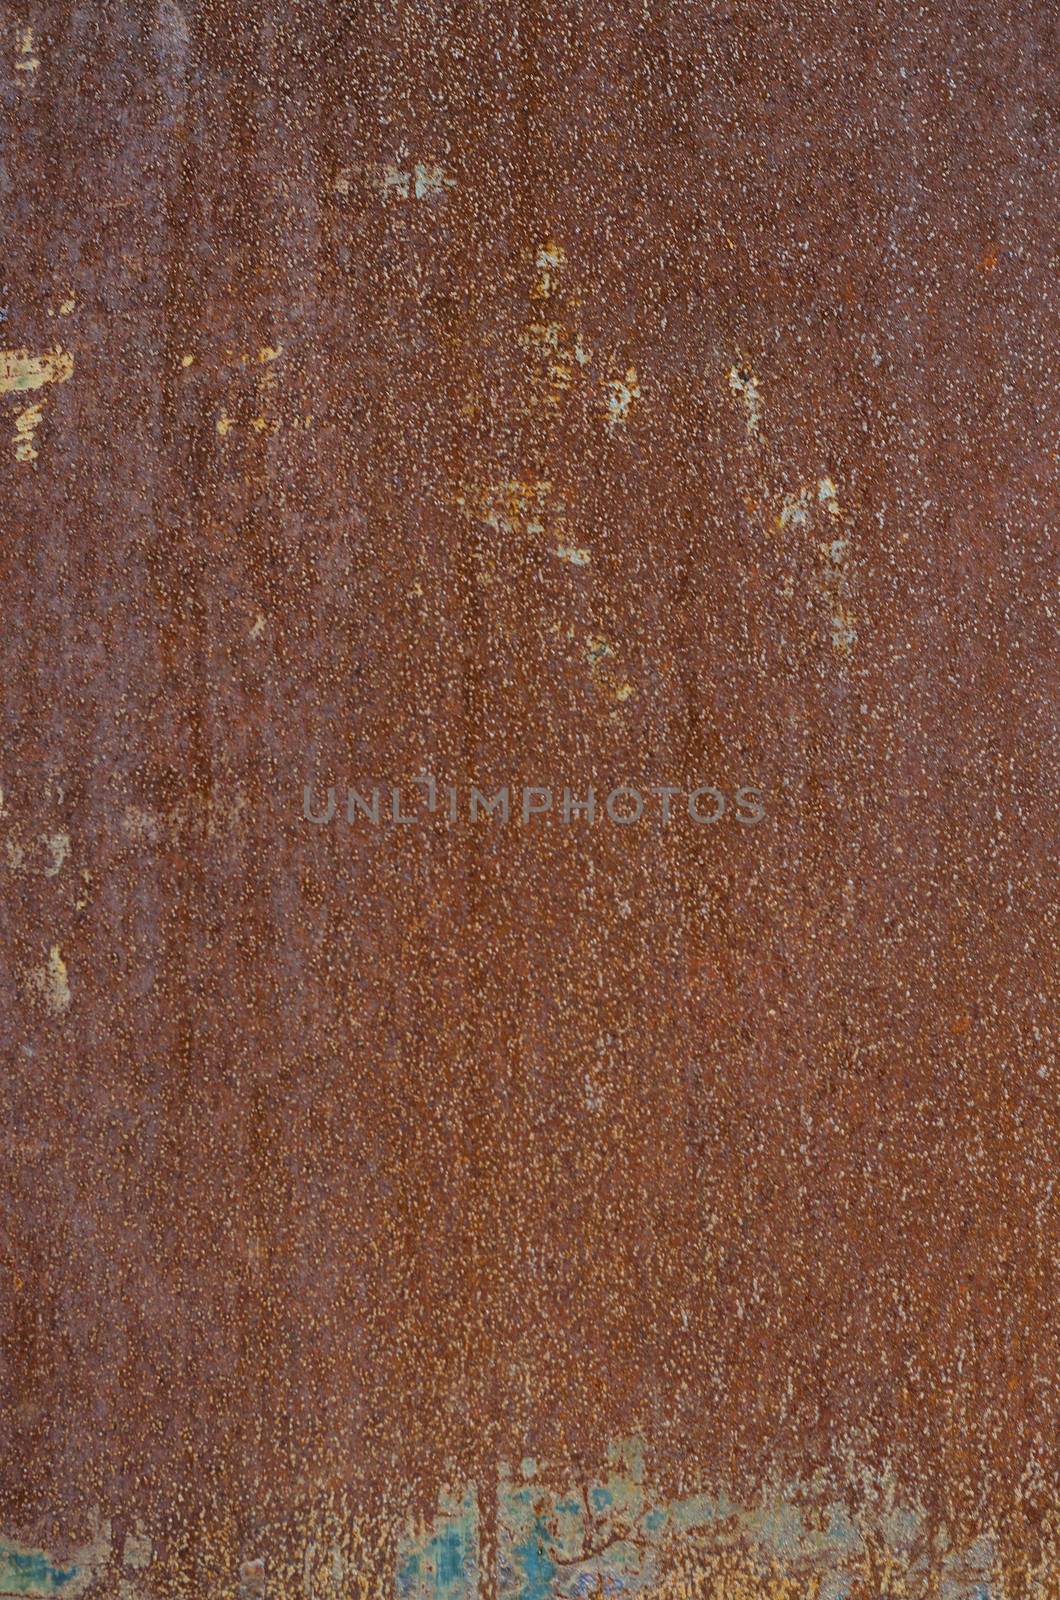 Iron rust texture background